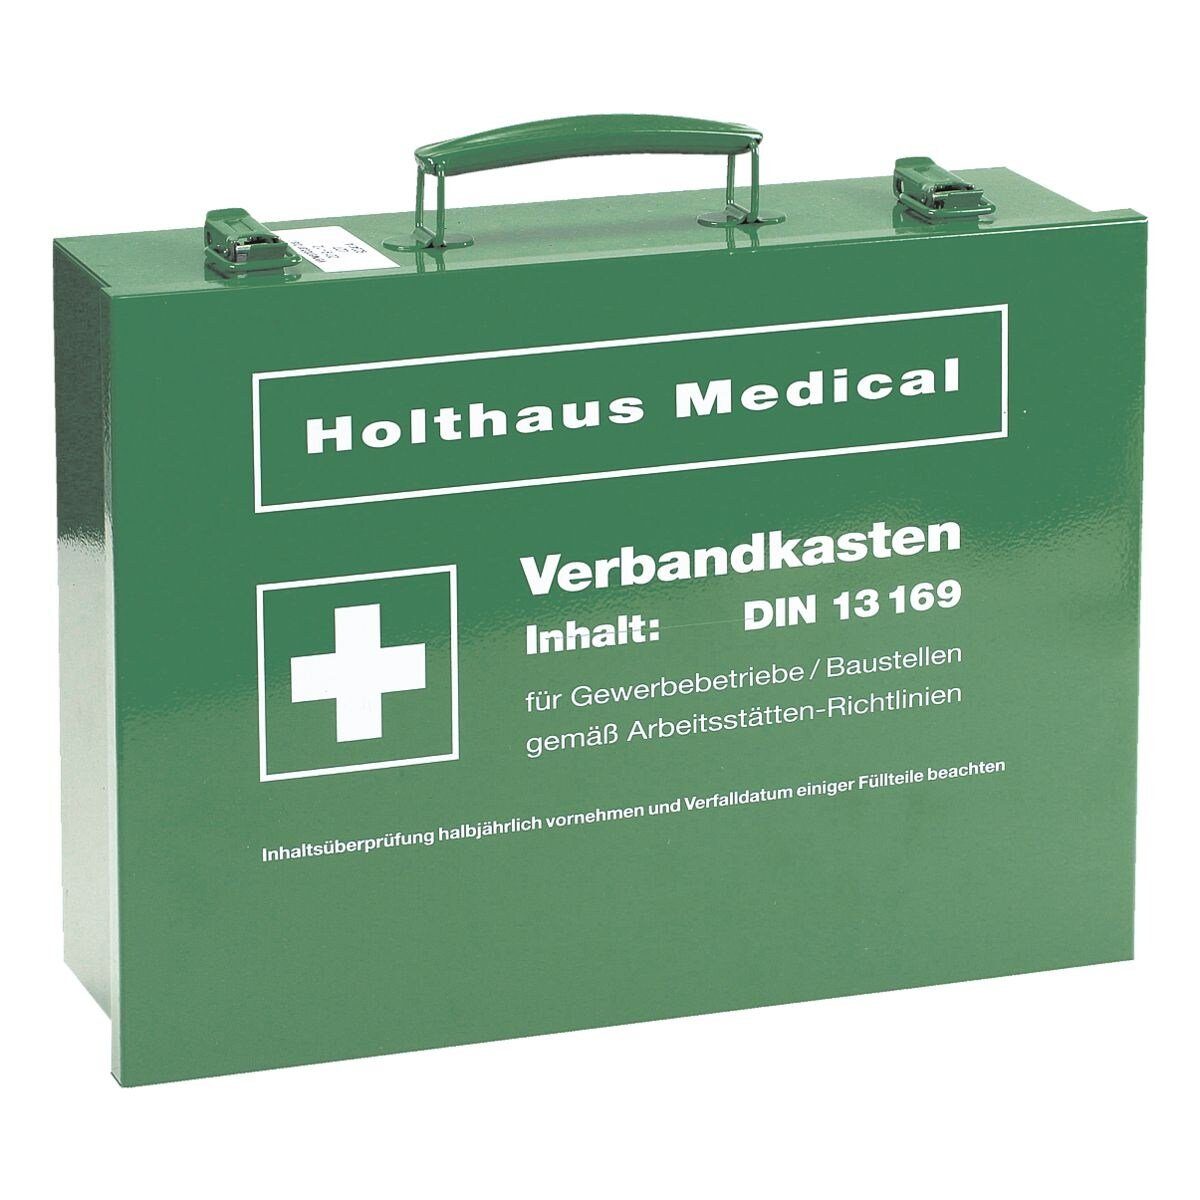 DIN inkl. Erste-Hilfe-Koffer Stahlblech, Medical Füllsortiment 13169 nach Holthaus